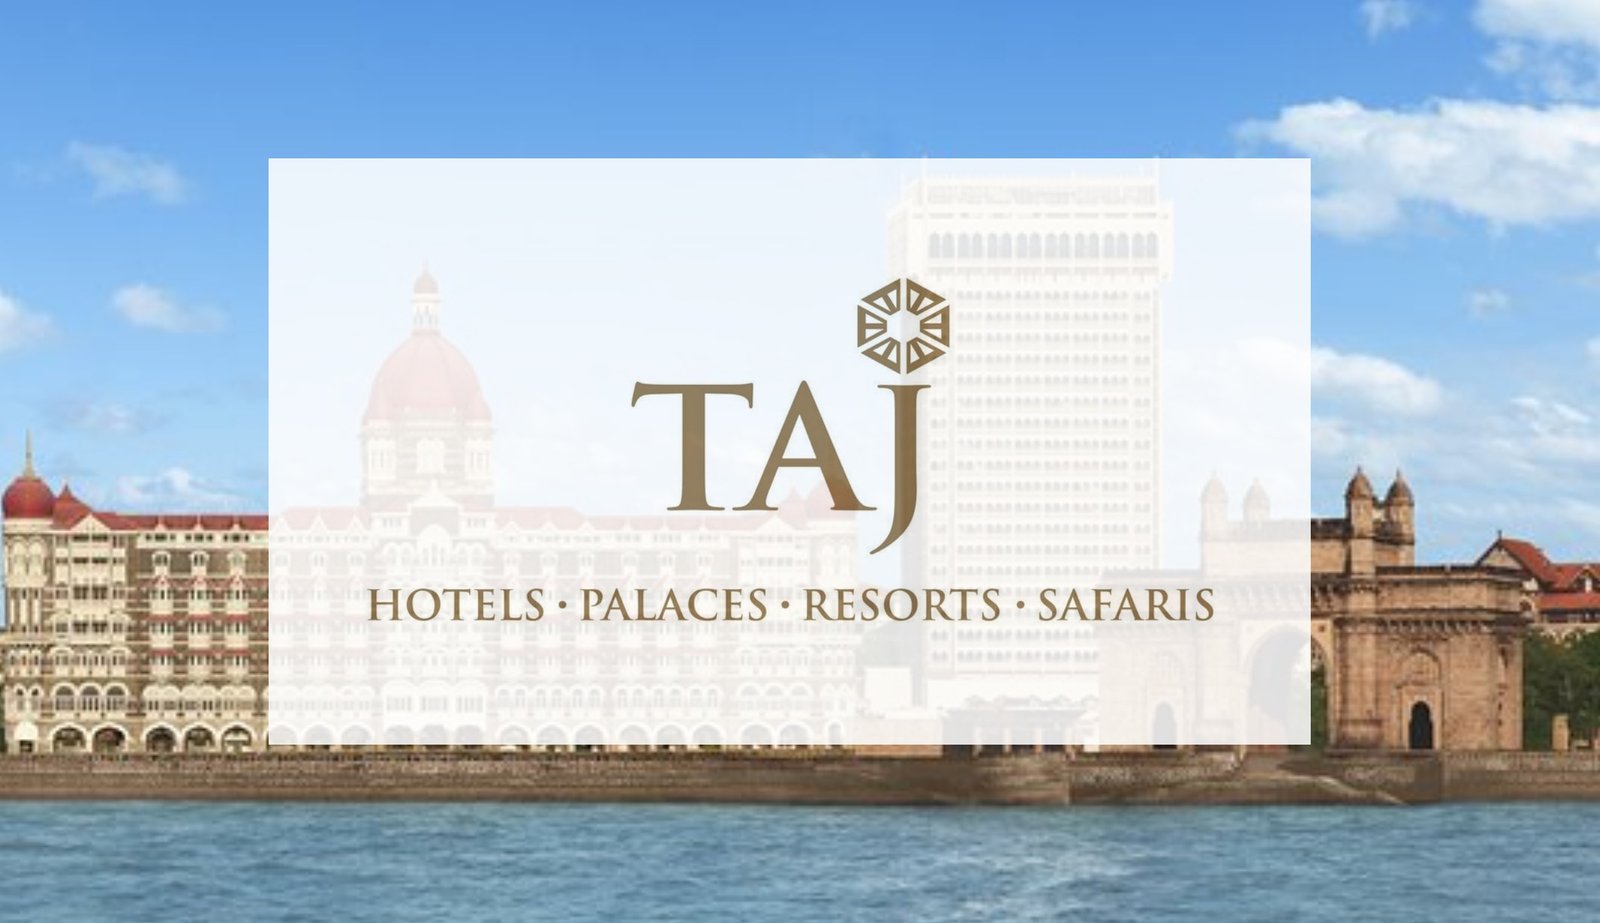 SWOT analysis of Taj Hotels